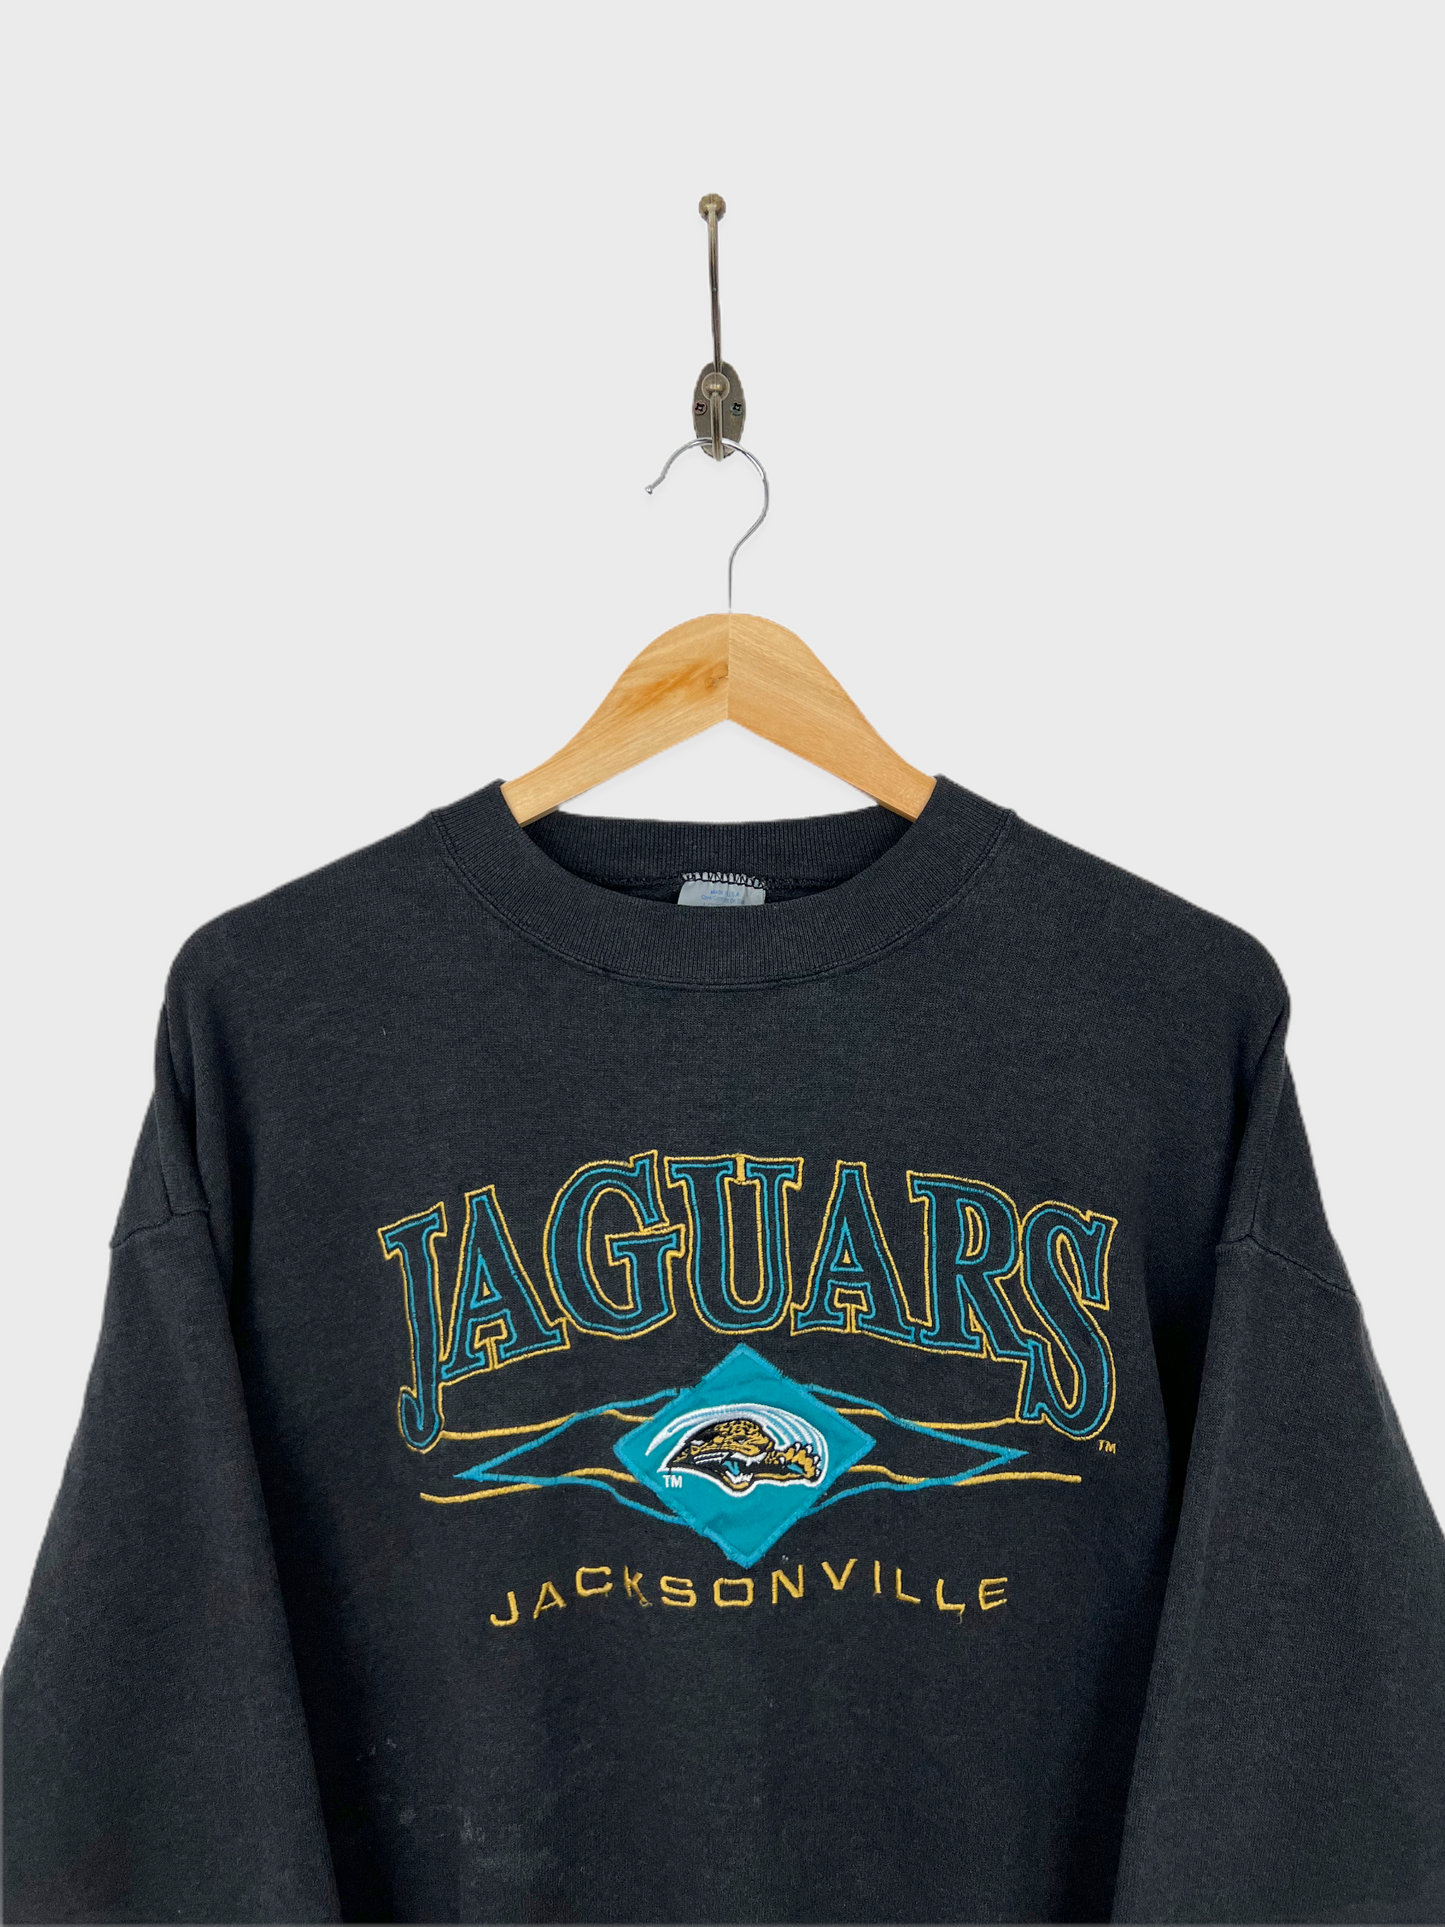 90's Jacksonville Jaguars USA Made Embroidered Vintage Sweatshirt Size M-L